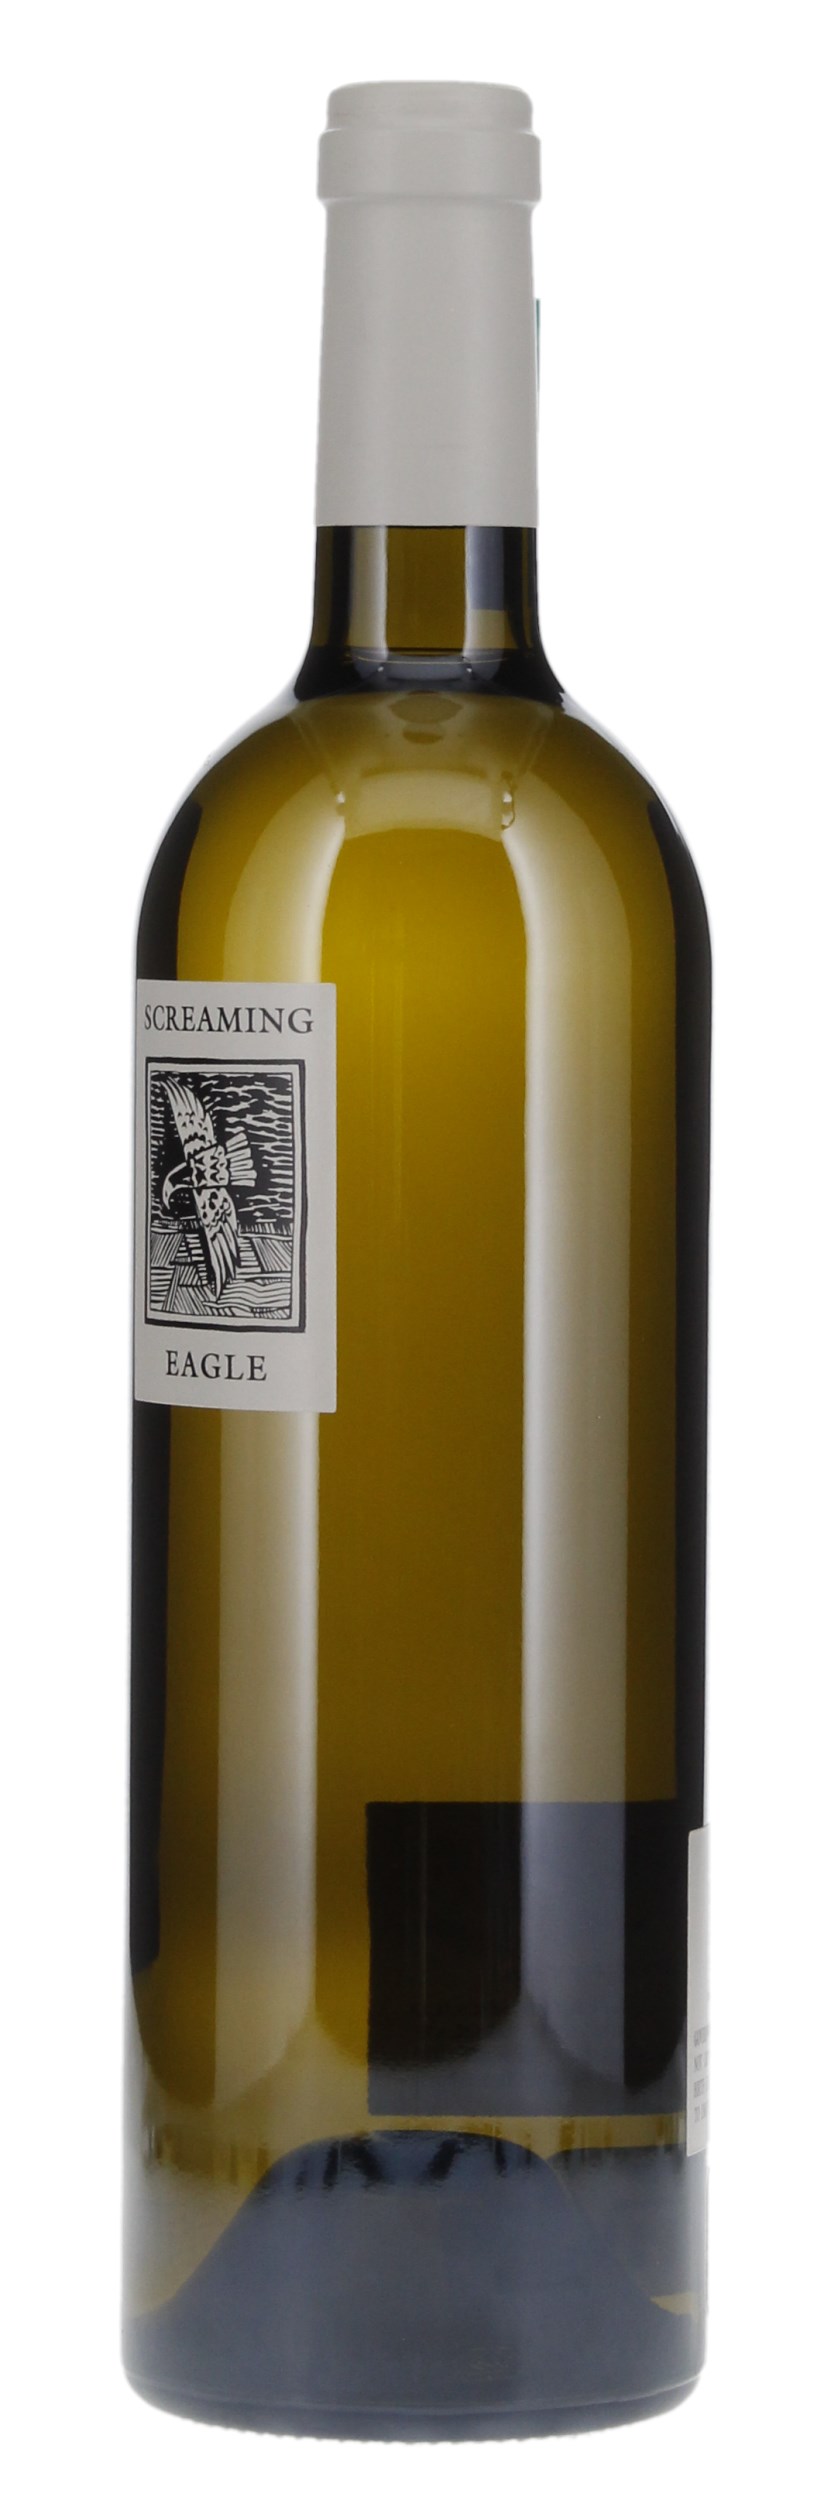 2018 Screaming Eagle Sauvignon Blanc, 750ml